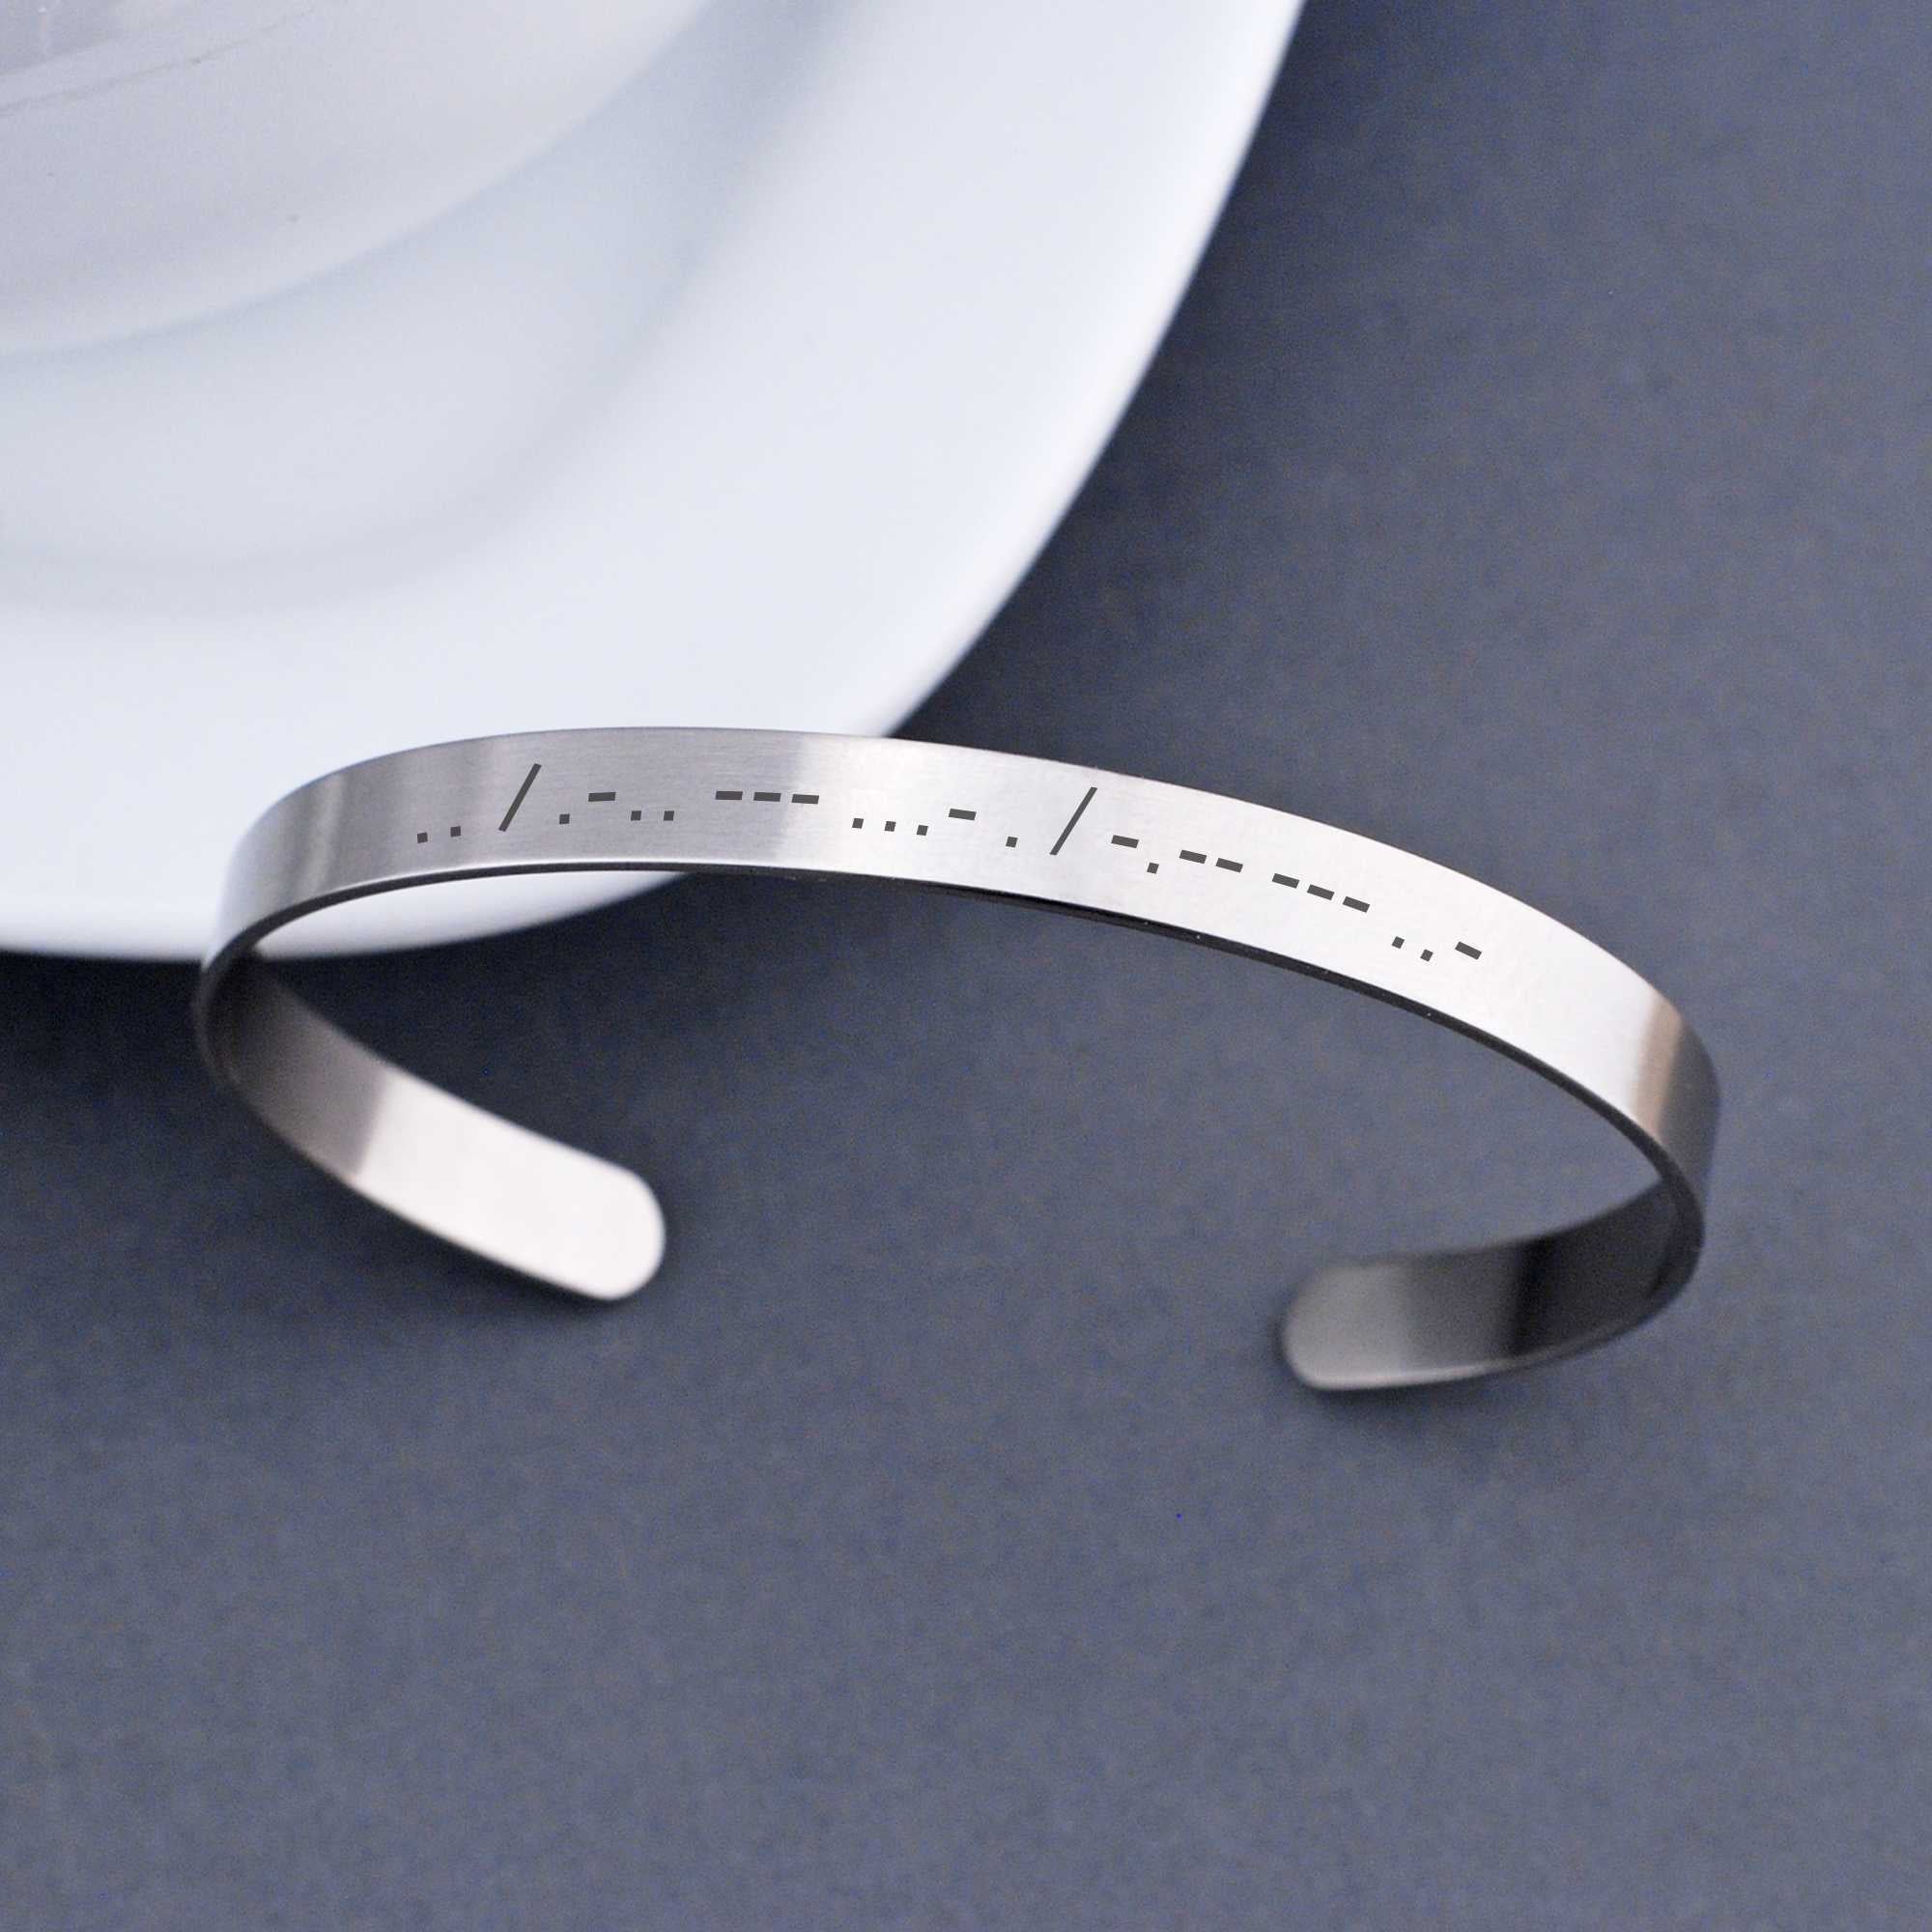 Hidden Message Custom Bracelet - Custom Sterling Silver Cuff Bracelet Inside and Outside / Typewriting